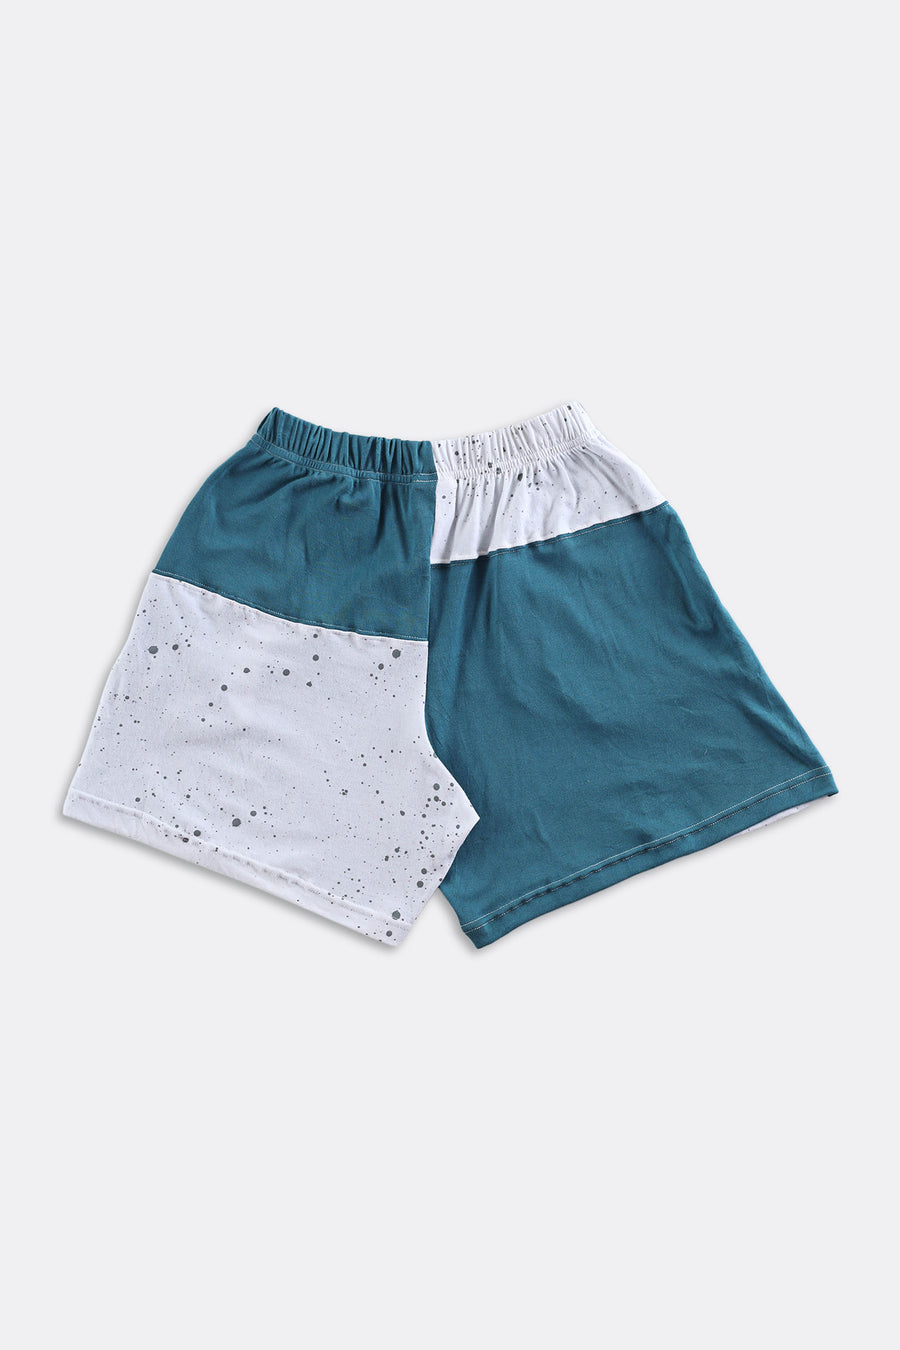 Unisex Rework Nike Patchwork Tee Shorts - Women-XS, Men-XXS